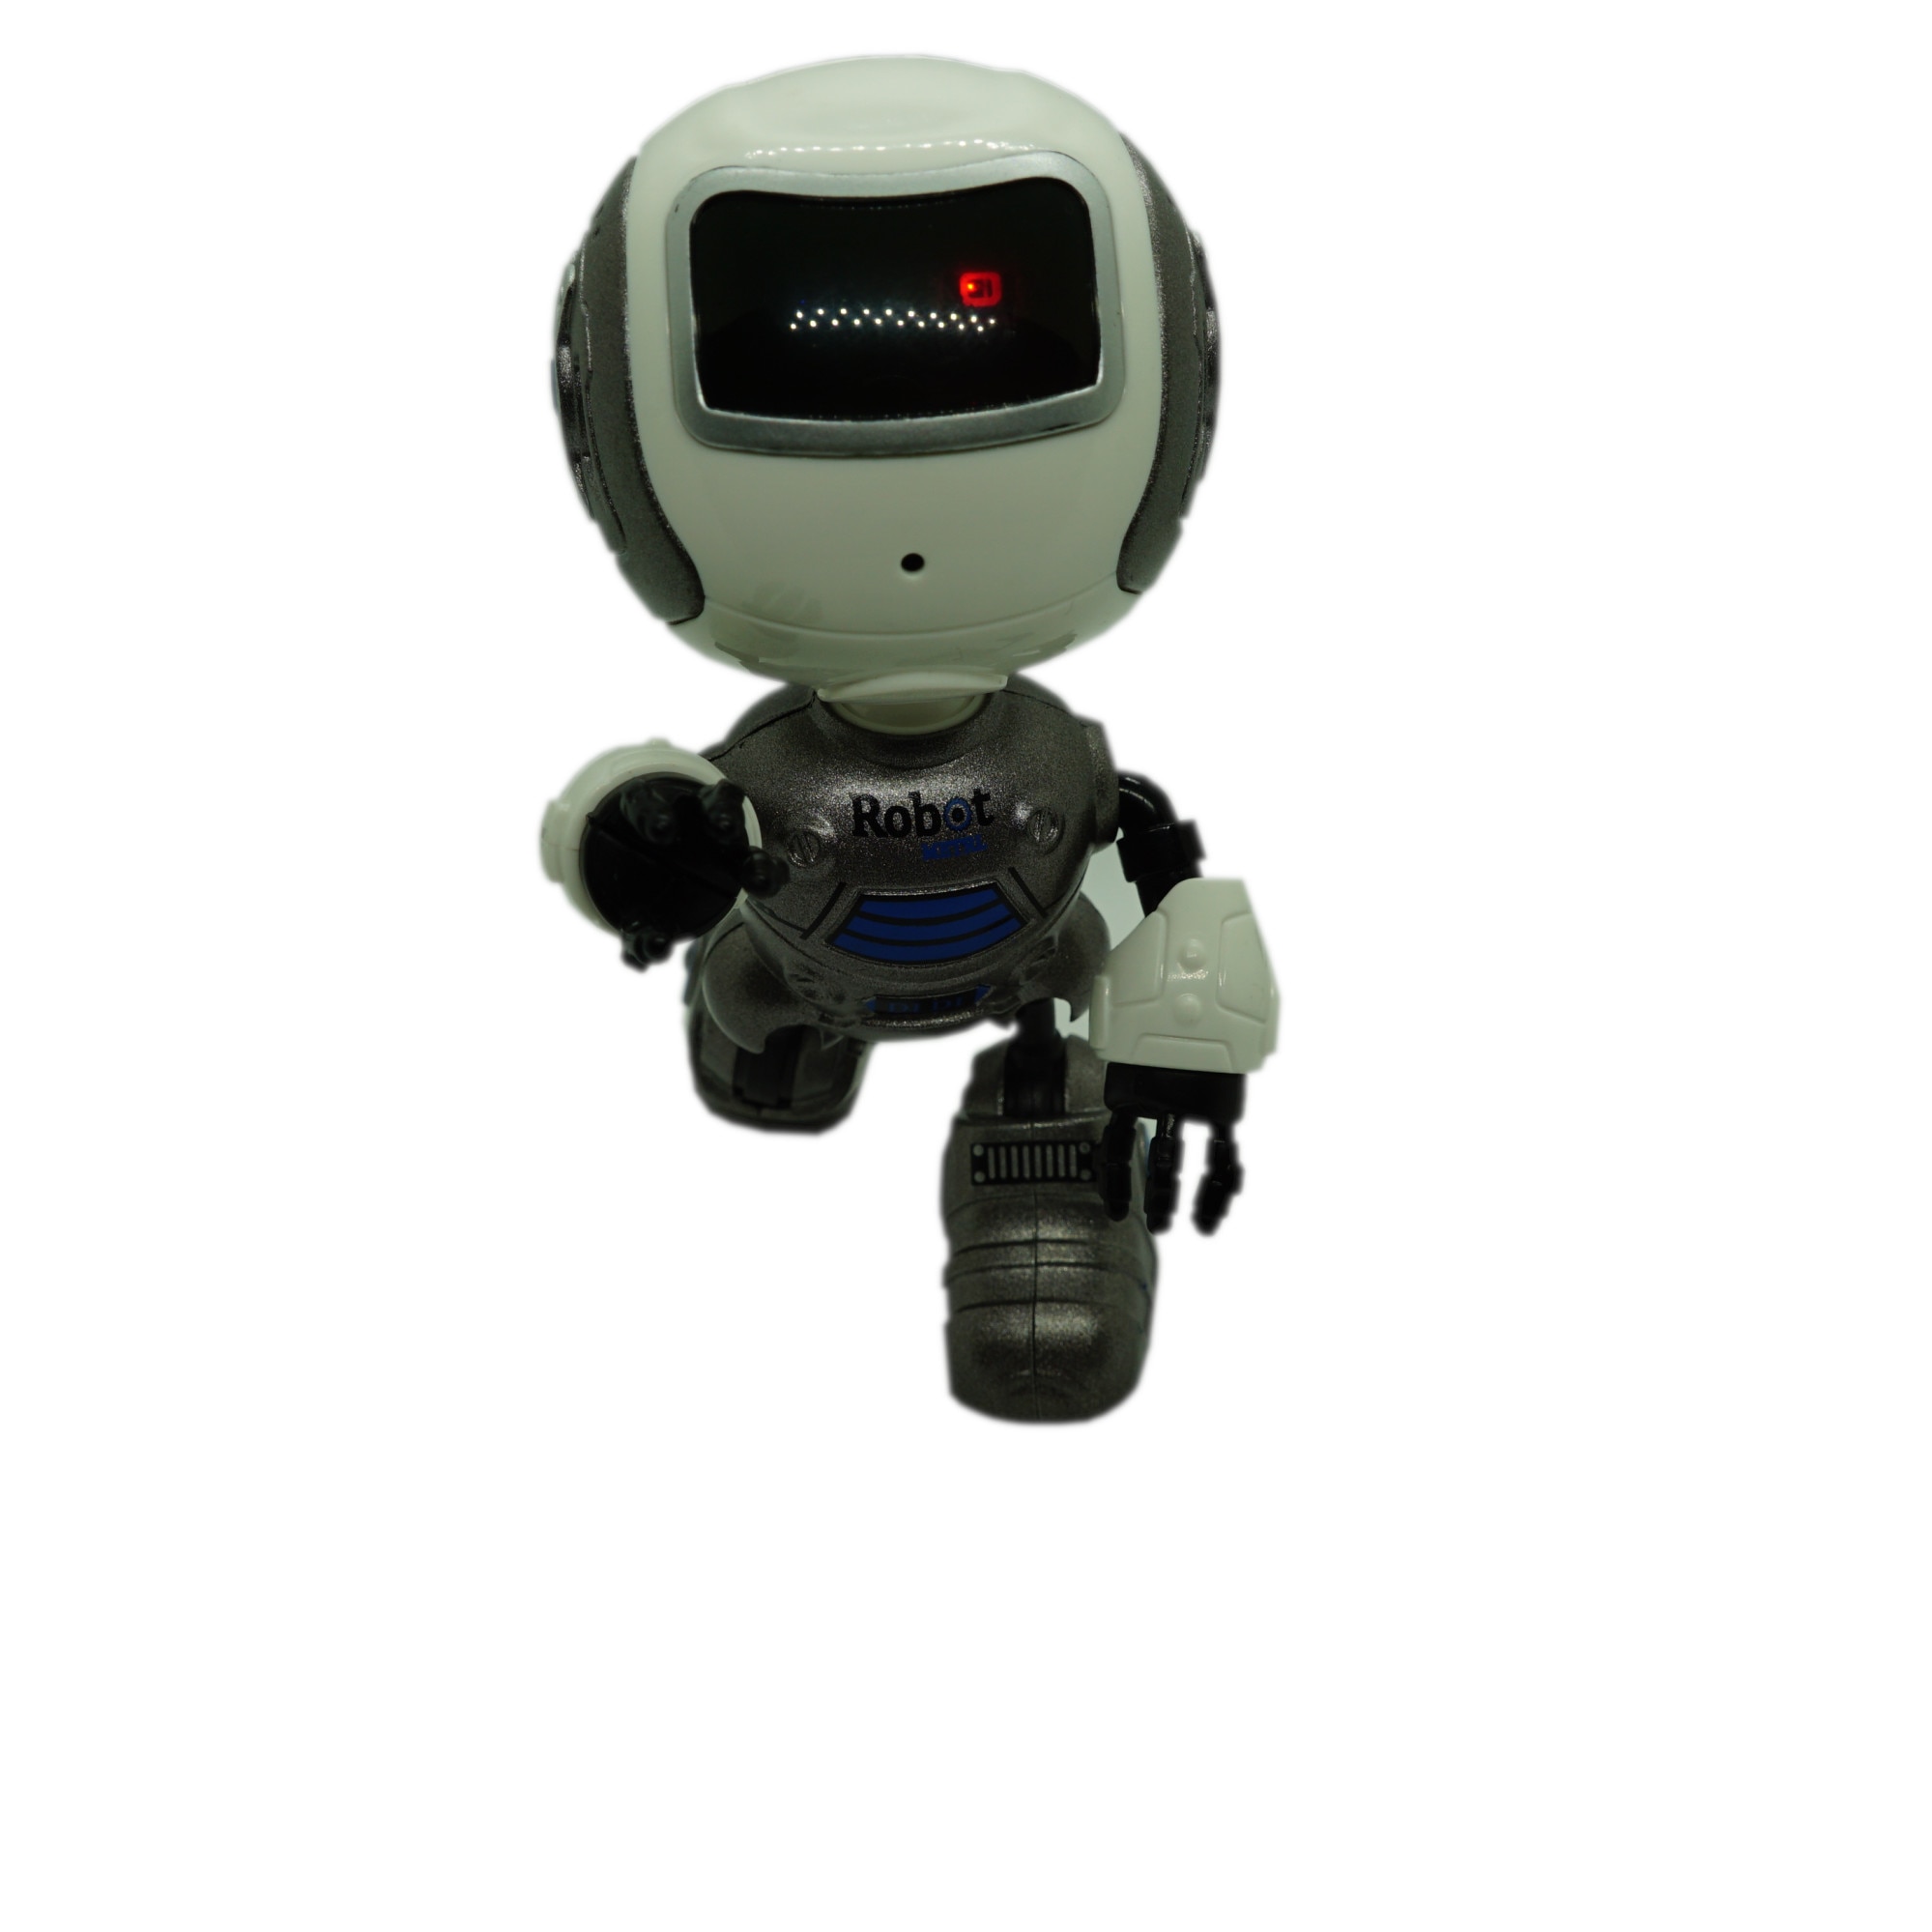 Sorprendido Juicio kiwi Robot Didi, Kings Toy, Metal, Alb - eMAG.ro